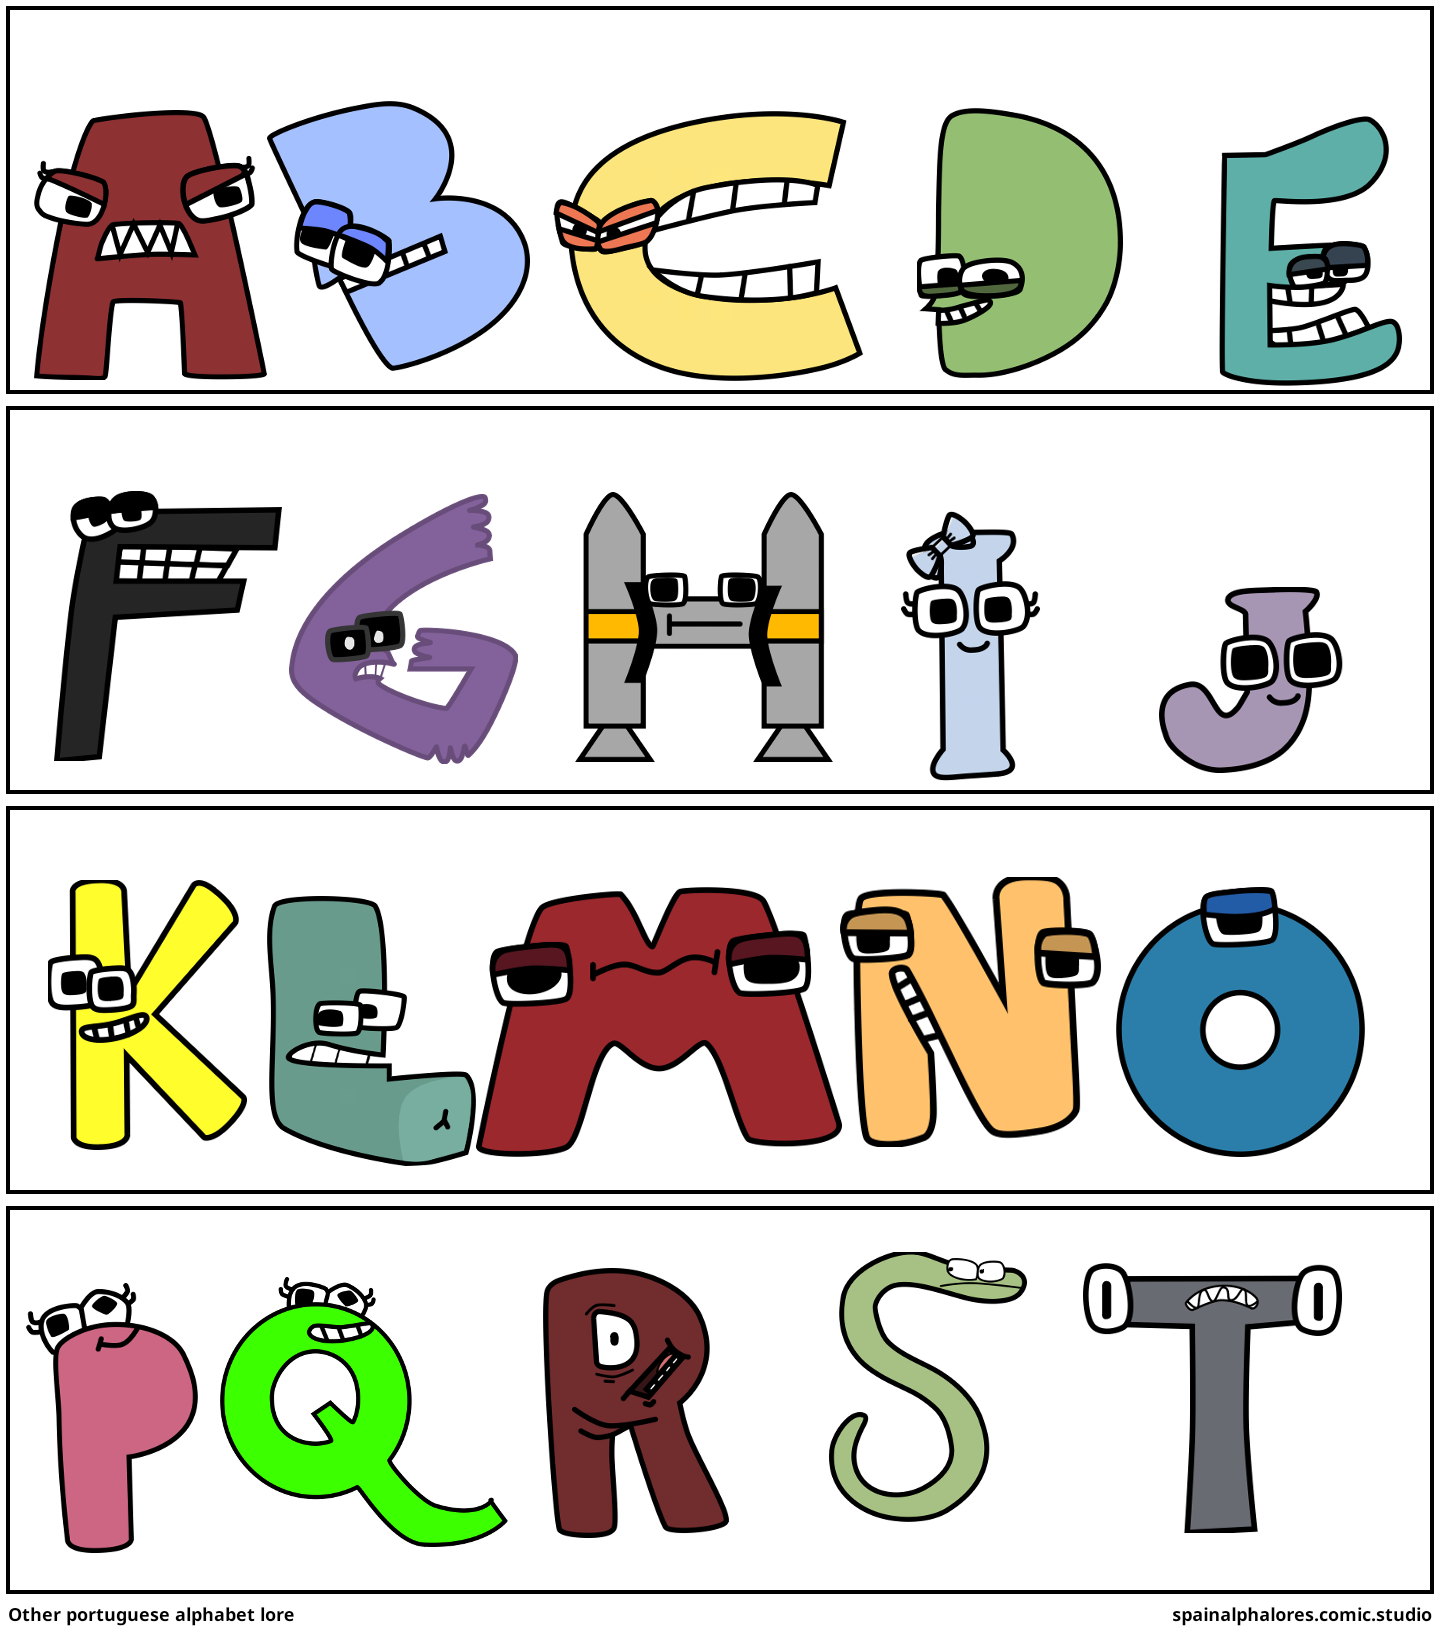 Portuguese Alphabet Lore 